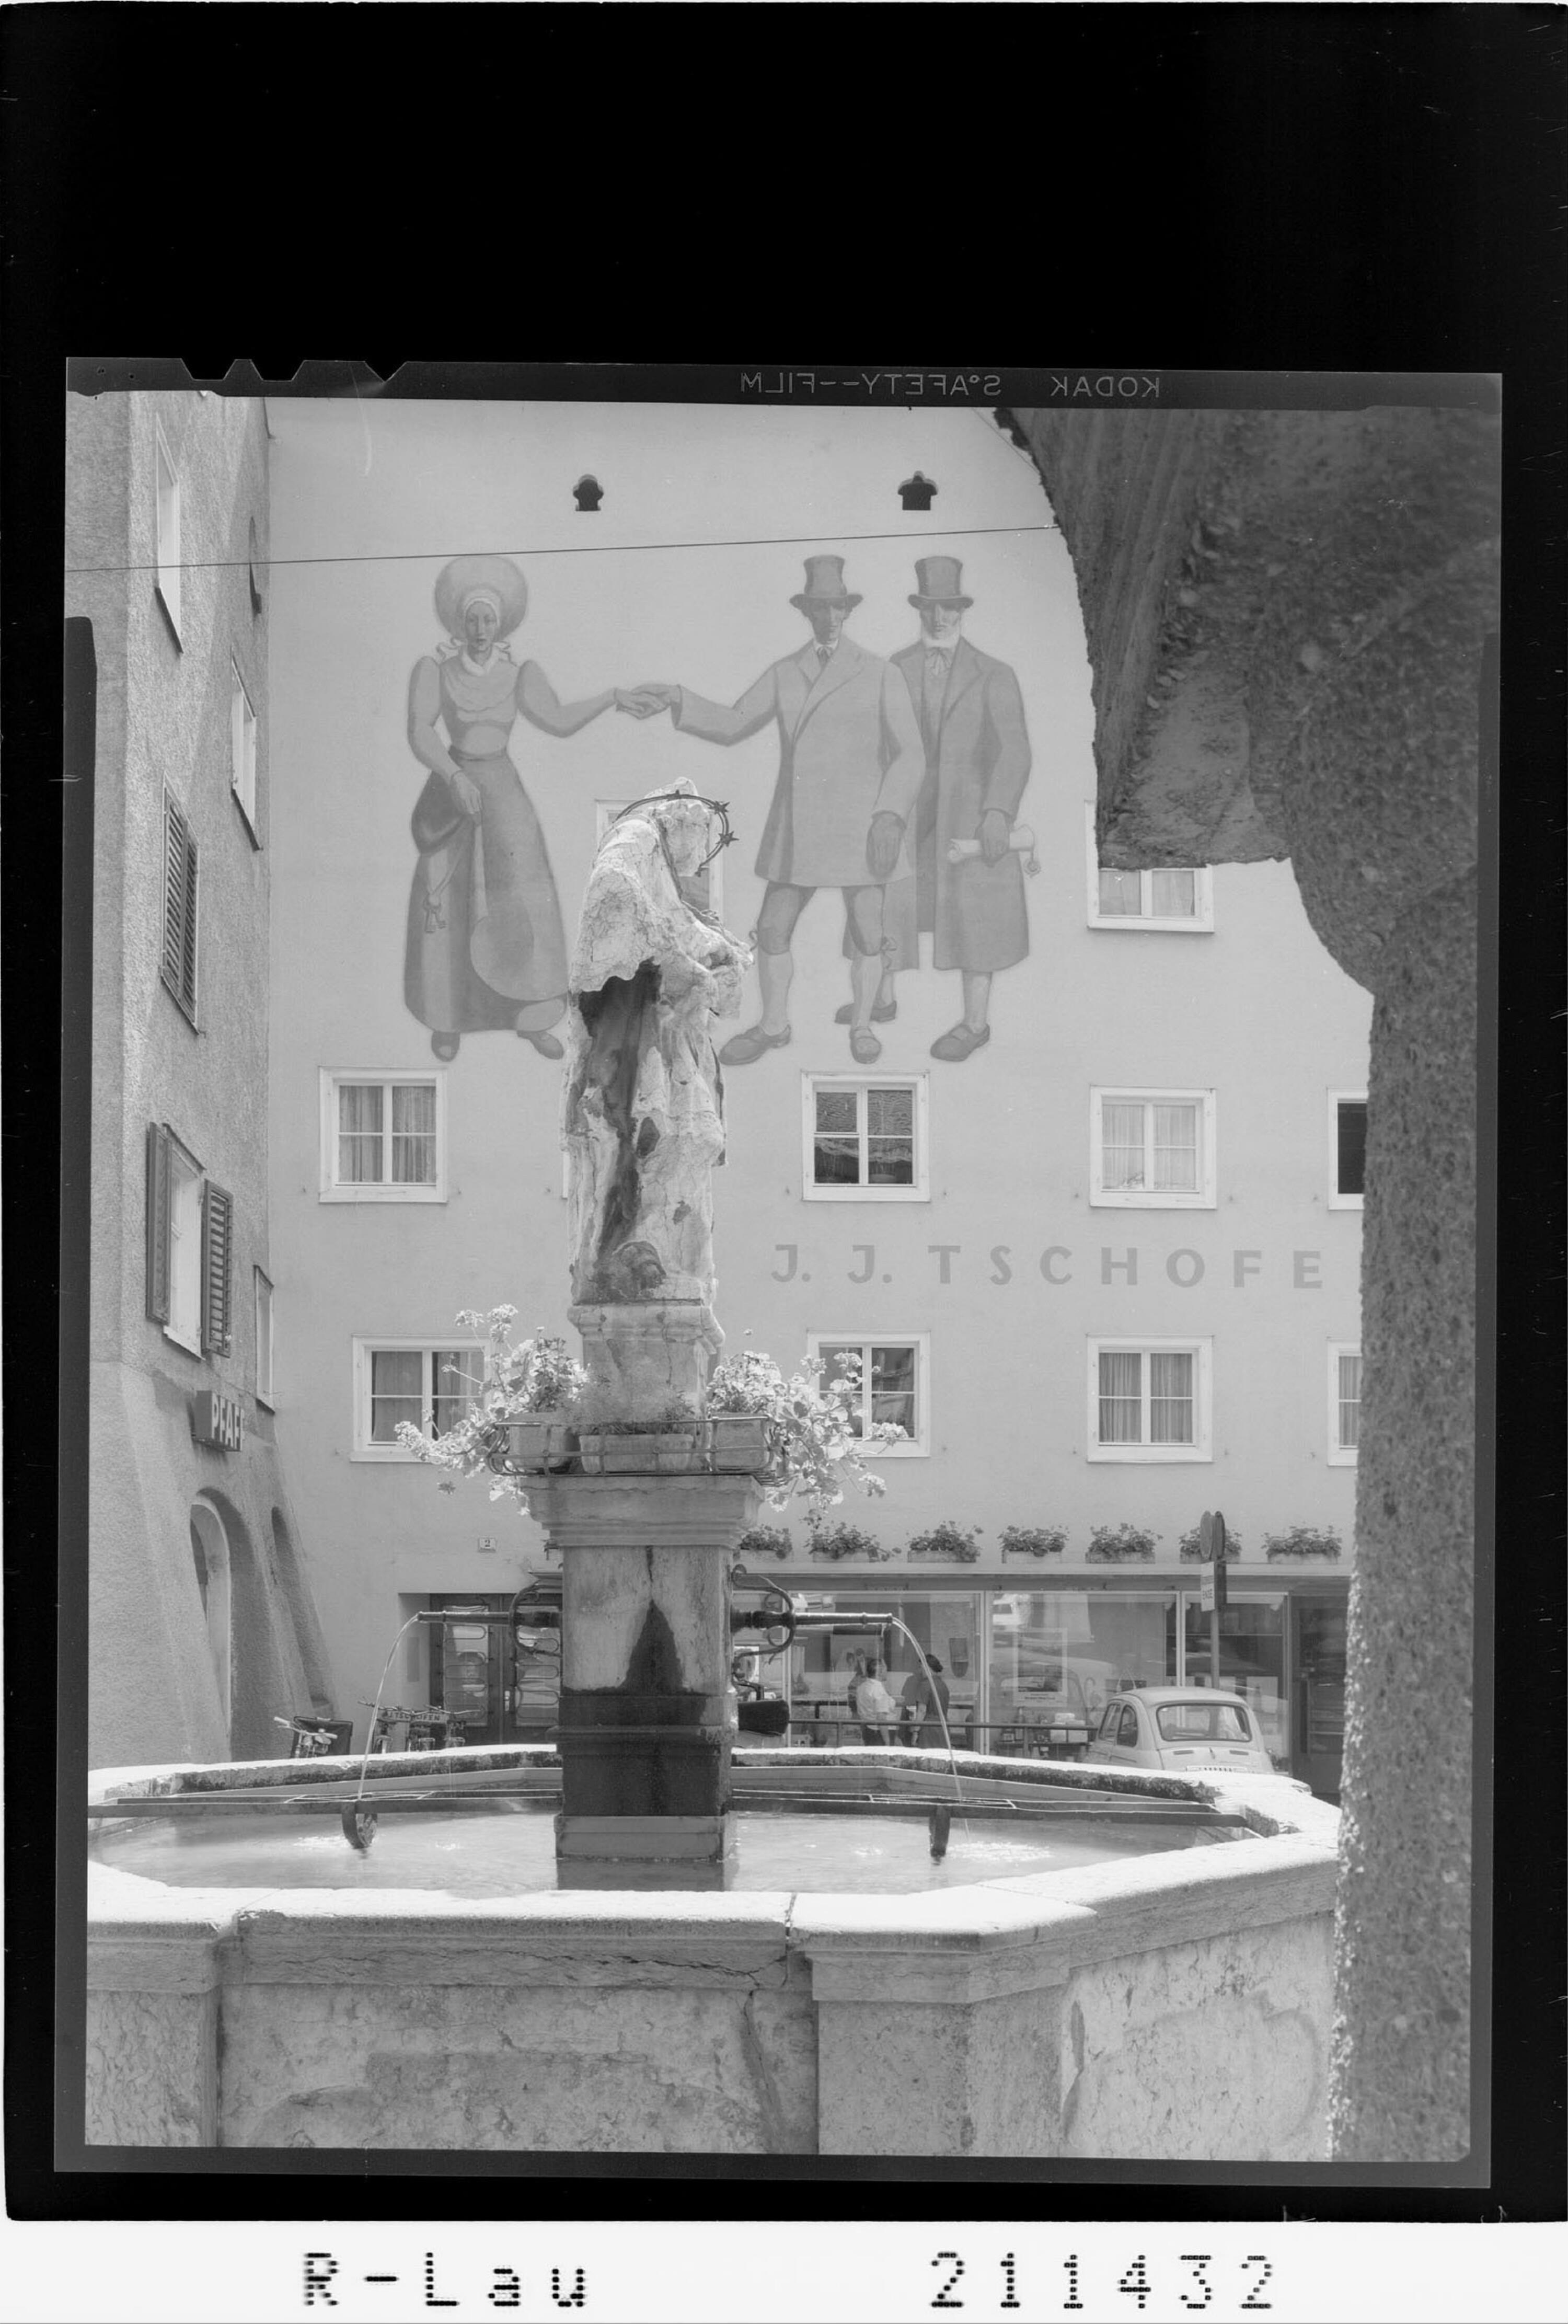 [Rathausbrunnen in Bludenz]></div>


    <hr>
    <div class=